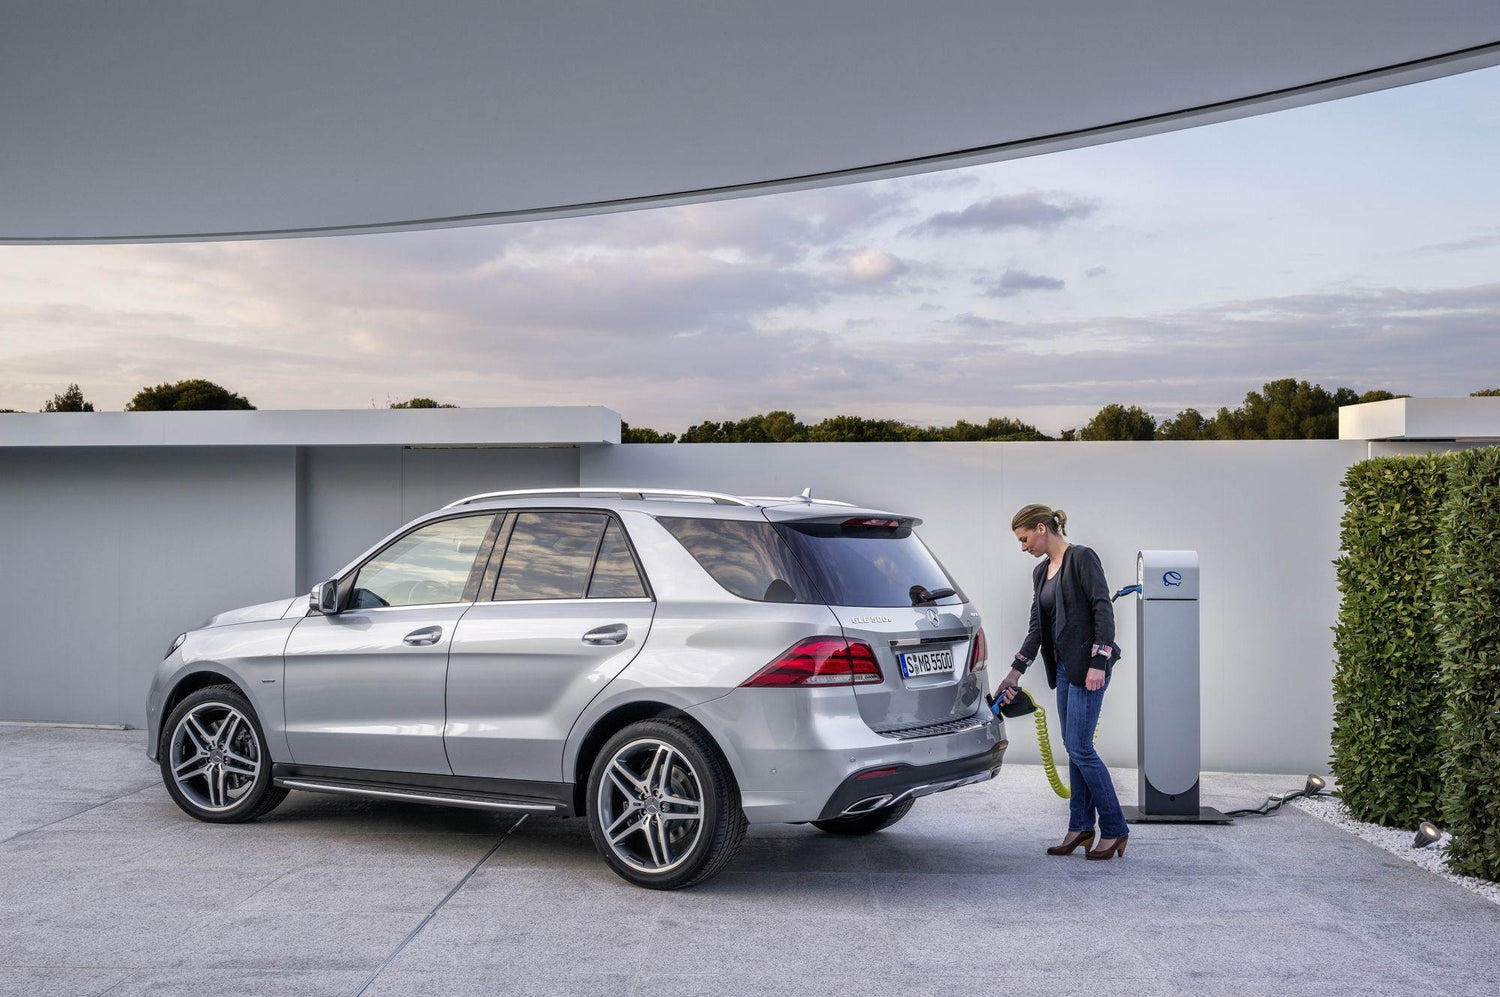 2018 Mercedes-Benz GLE400 dynamic posture｜Open high-end luxury car era | LFOTPP